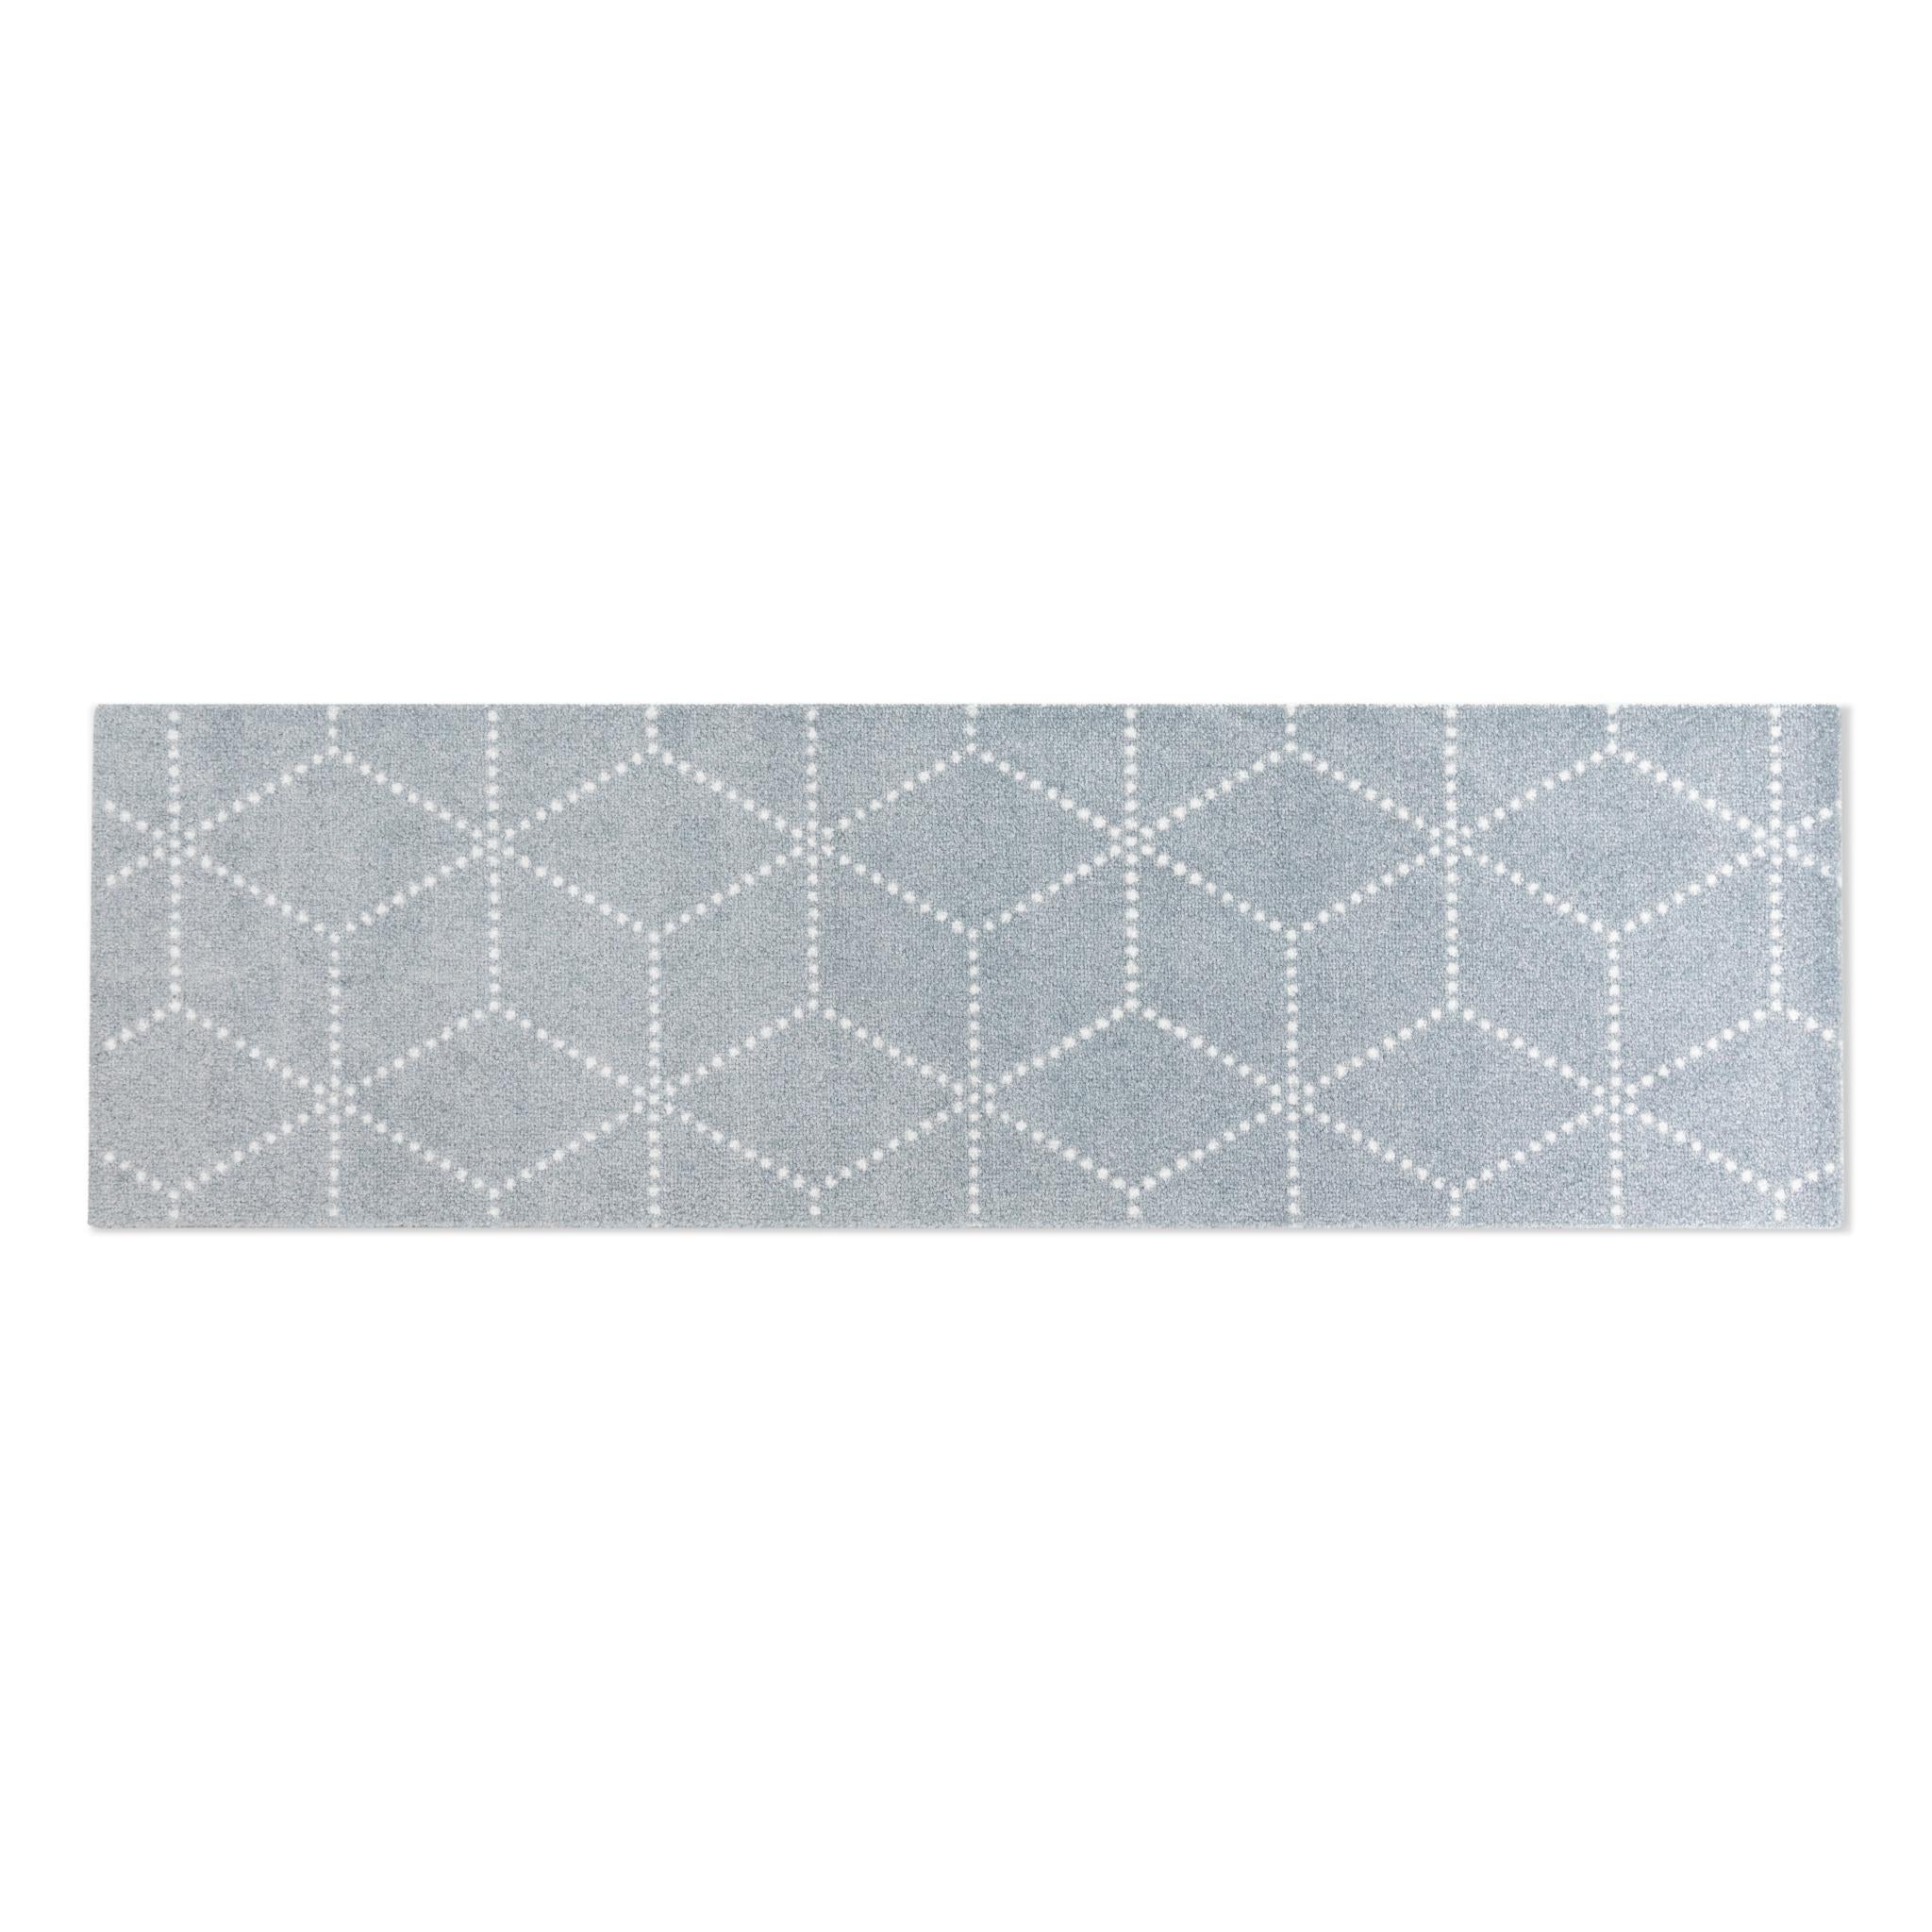 Heymat Doormat Hagl Silver, 45x150 cm